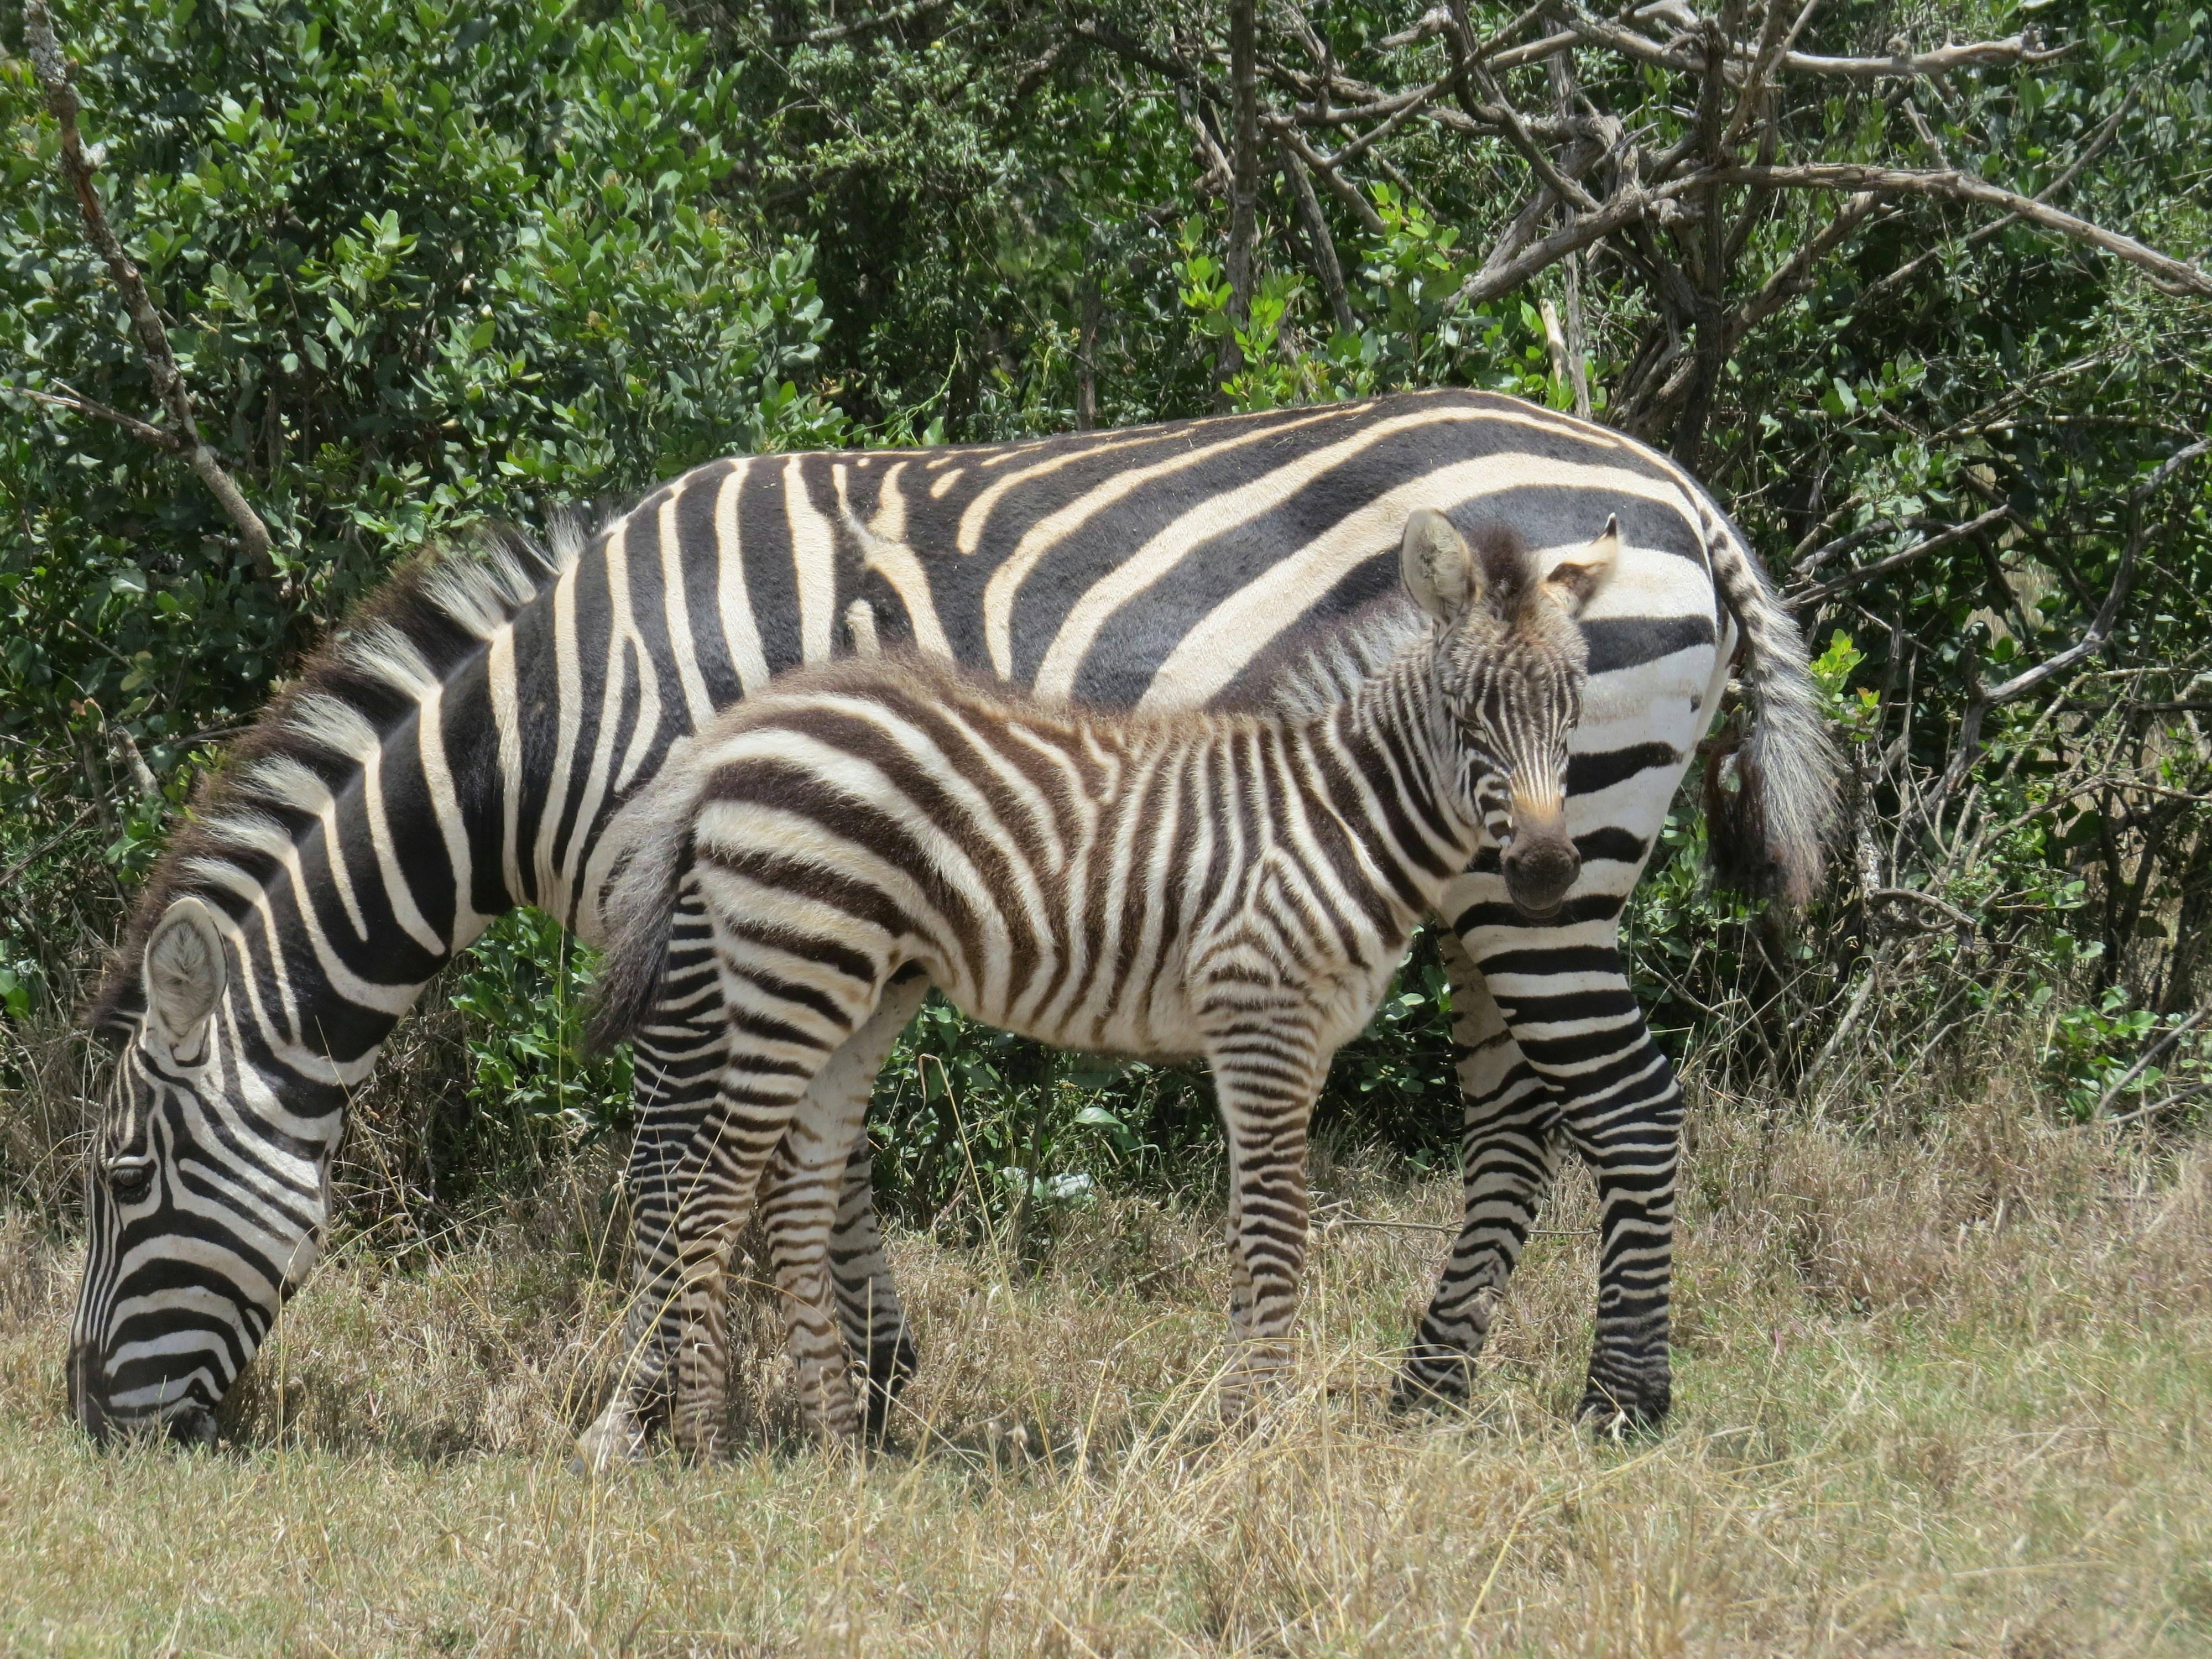 Baby Zebra and it's mum in Ol Pejeta, Kenya